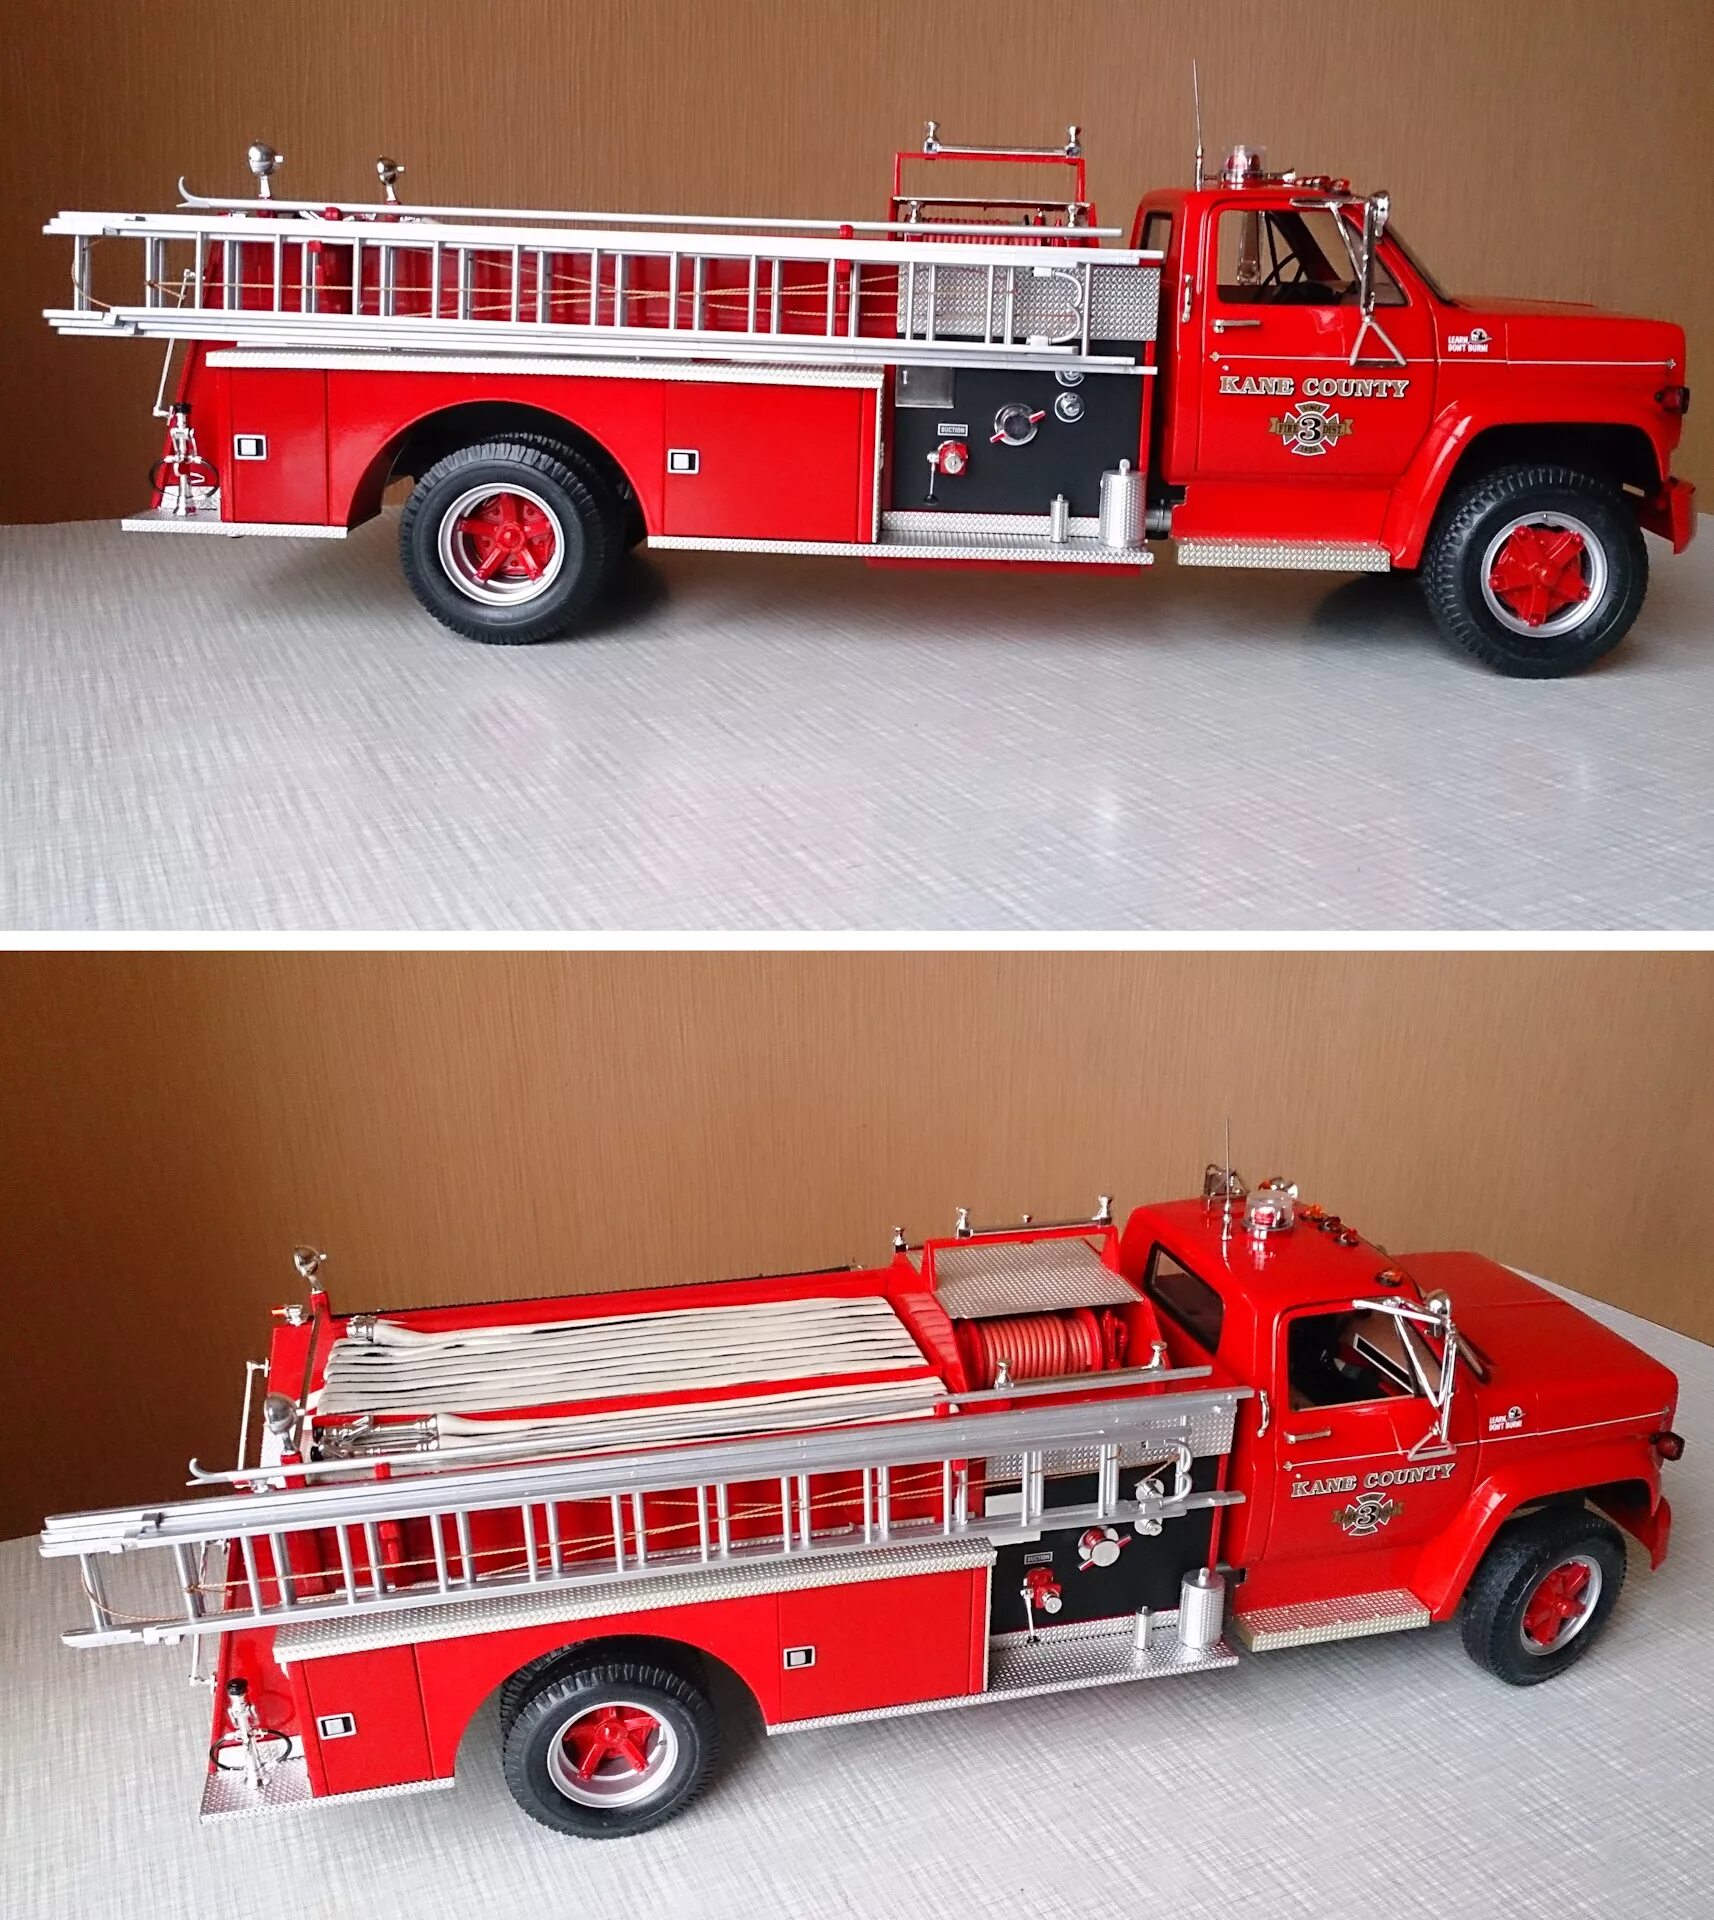 Mercedes-Benz LG-1519 пожарка. Пожарная машина НЛ 110. Пожарная машина siku. Siku 171 пожарная машина модель.